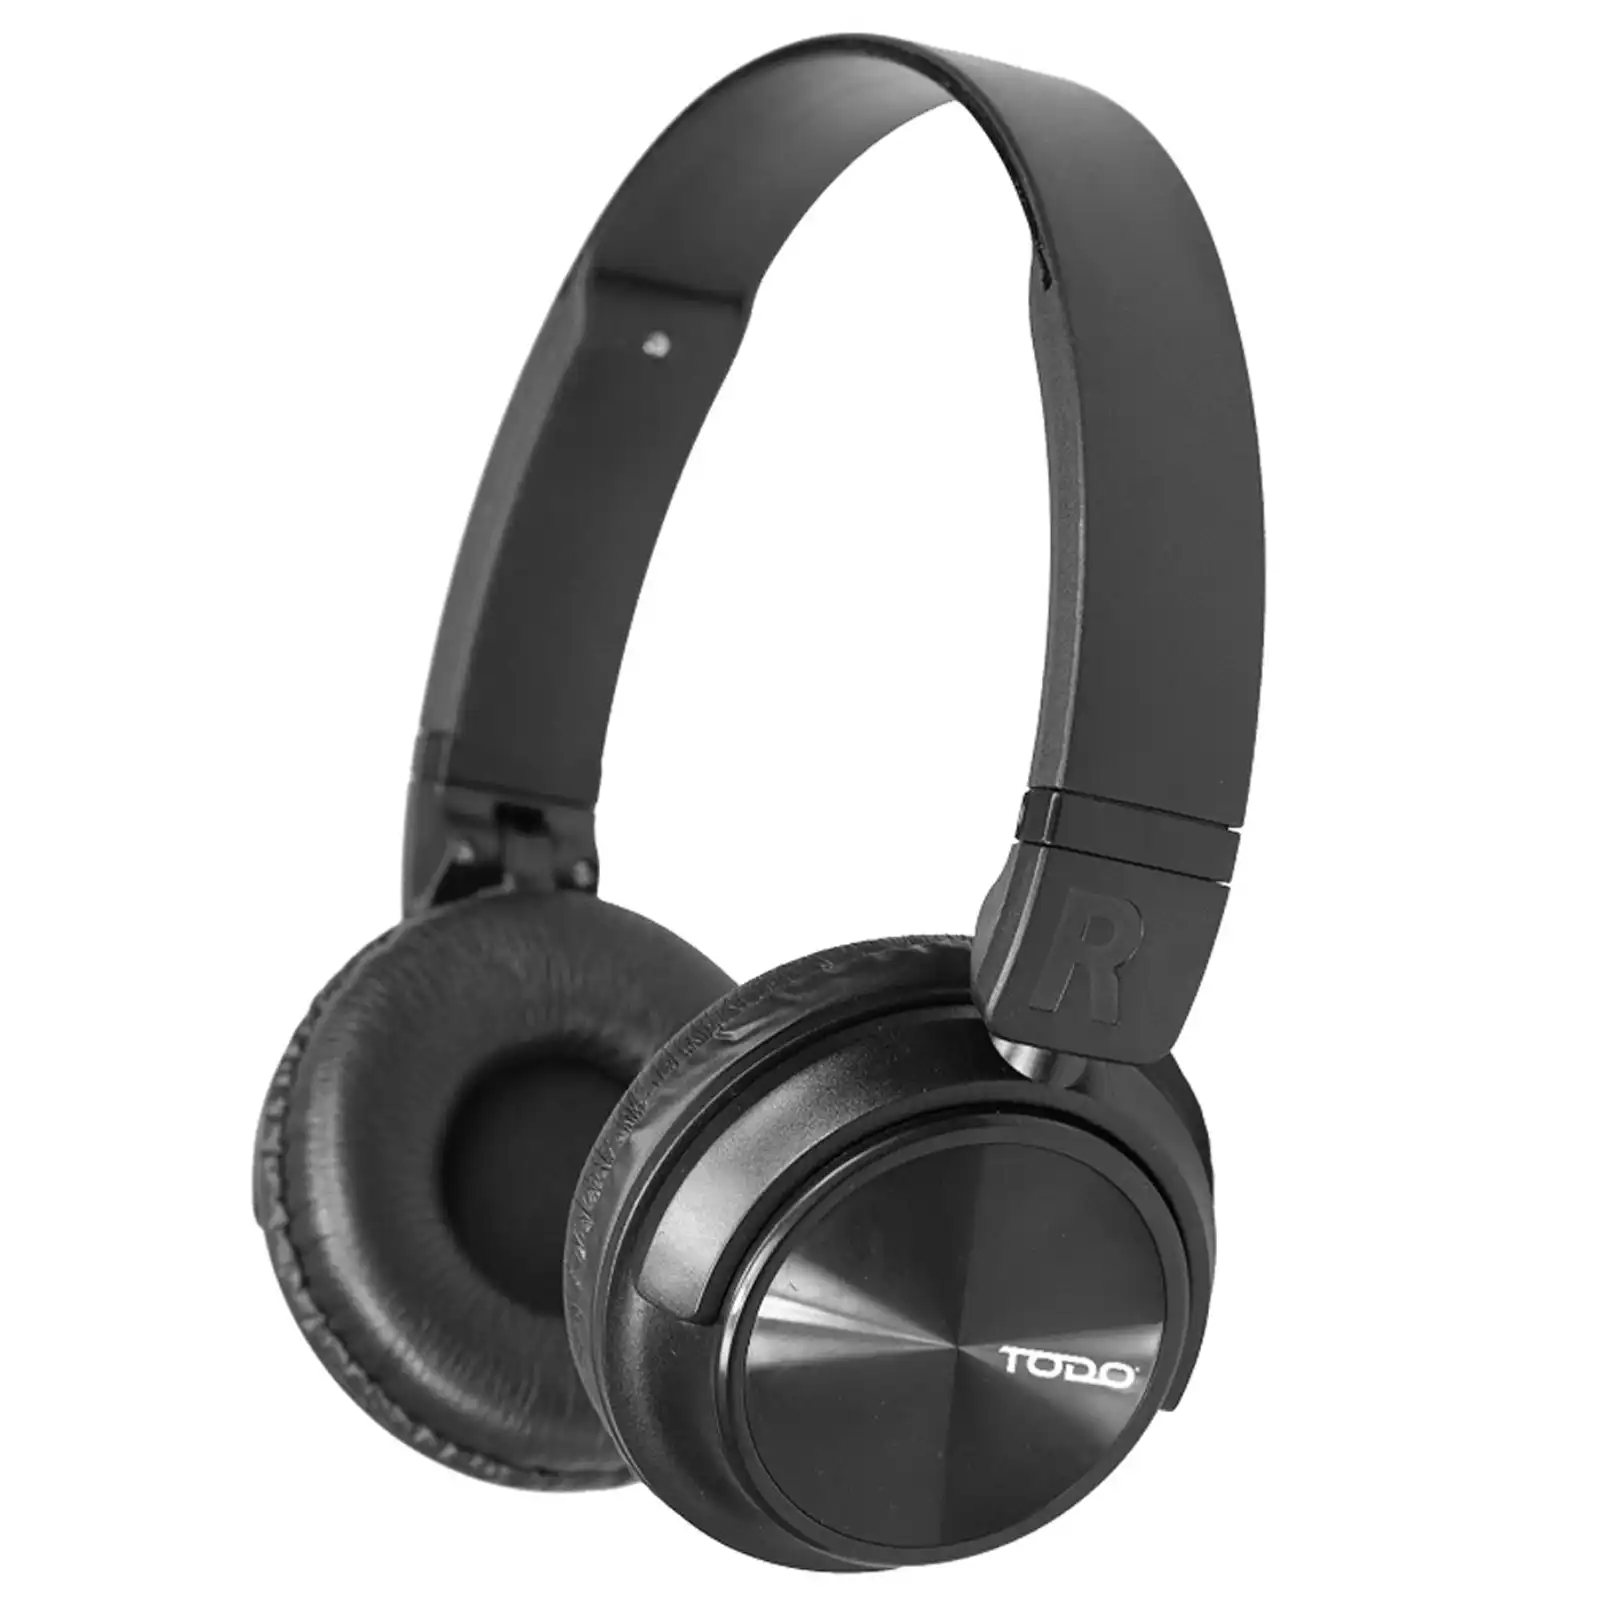 TODO Stereo Bluetooth 5.0 Headphones Earphones Rechargeable Battery Neodymium Driver - Black